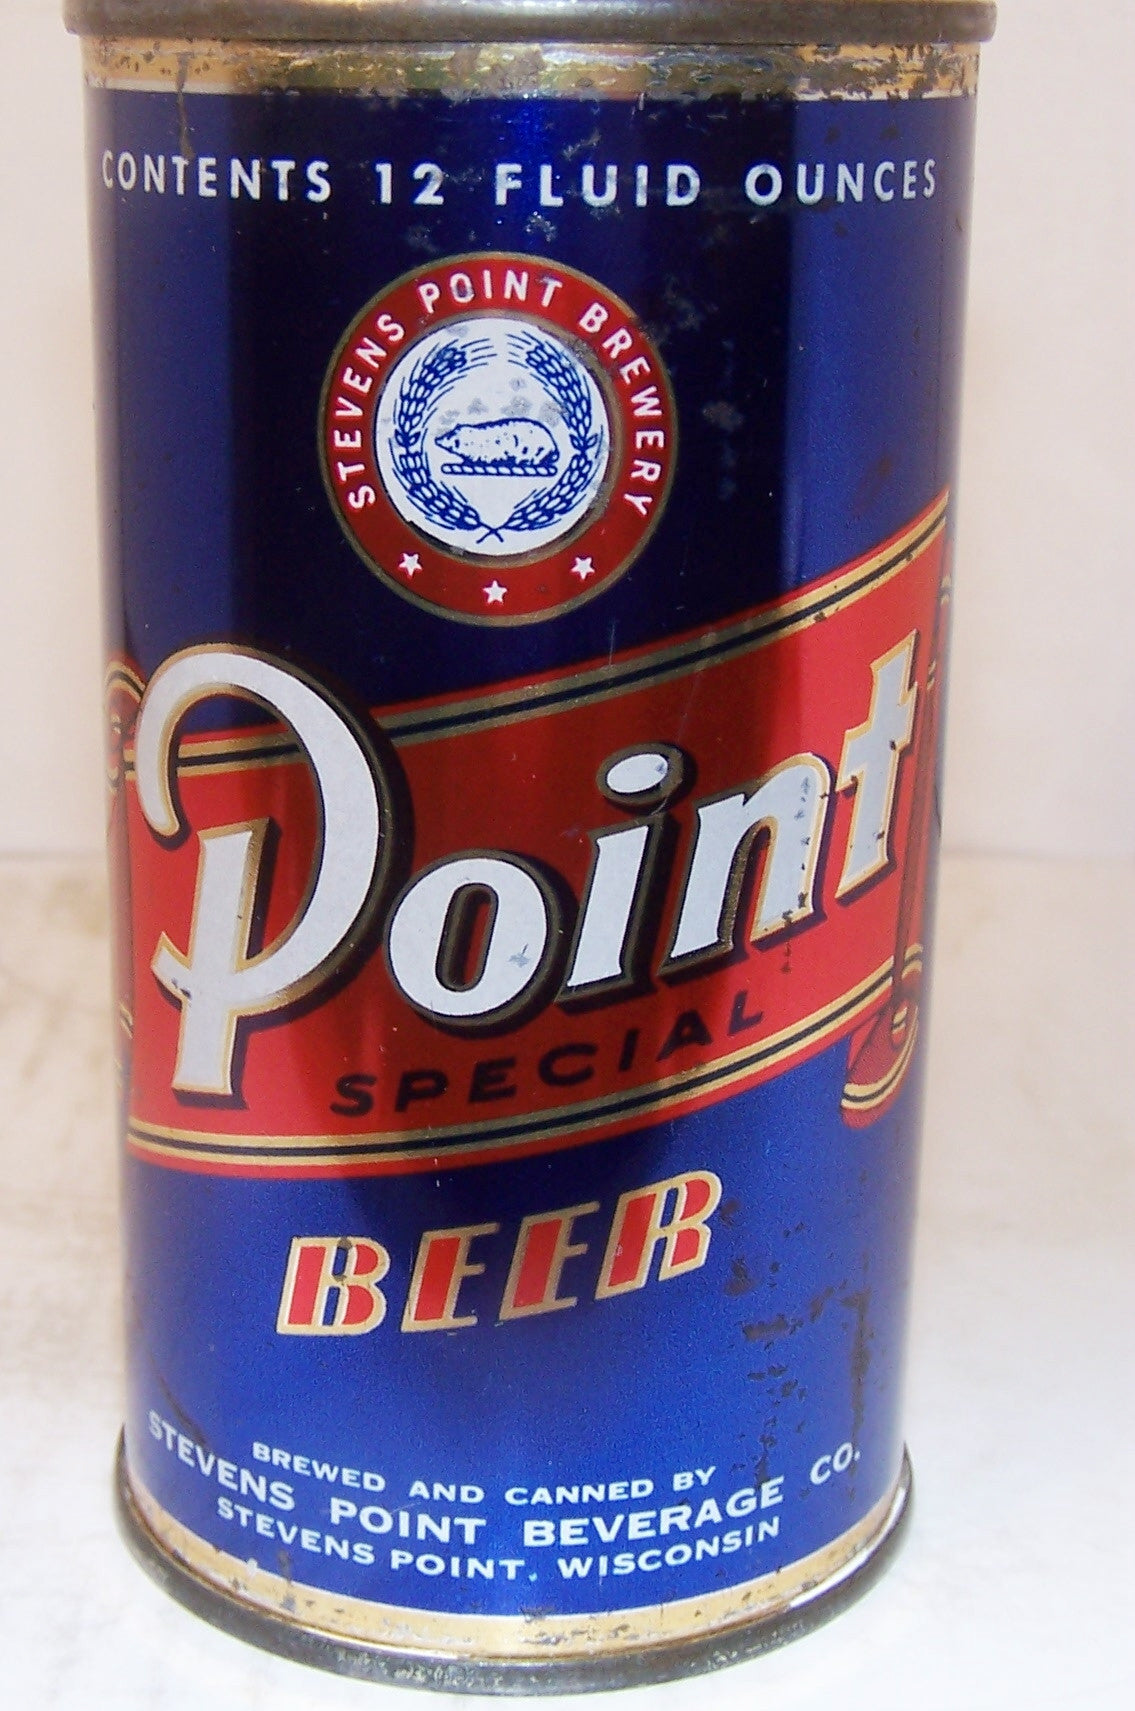 Point Special Beer, USBC 116-18, Grade 1- 04/14/17